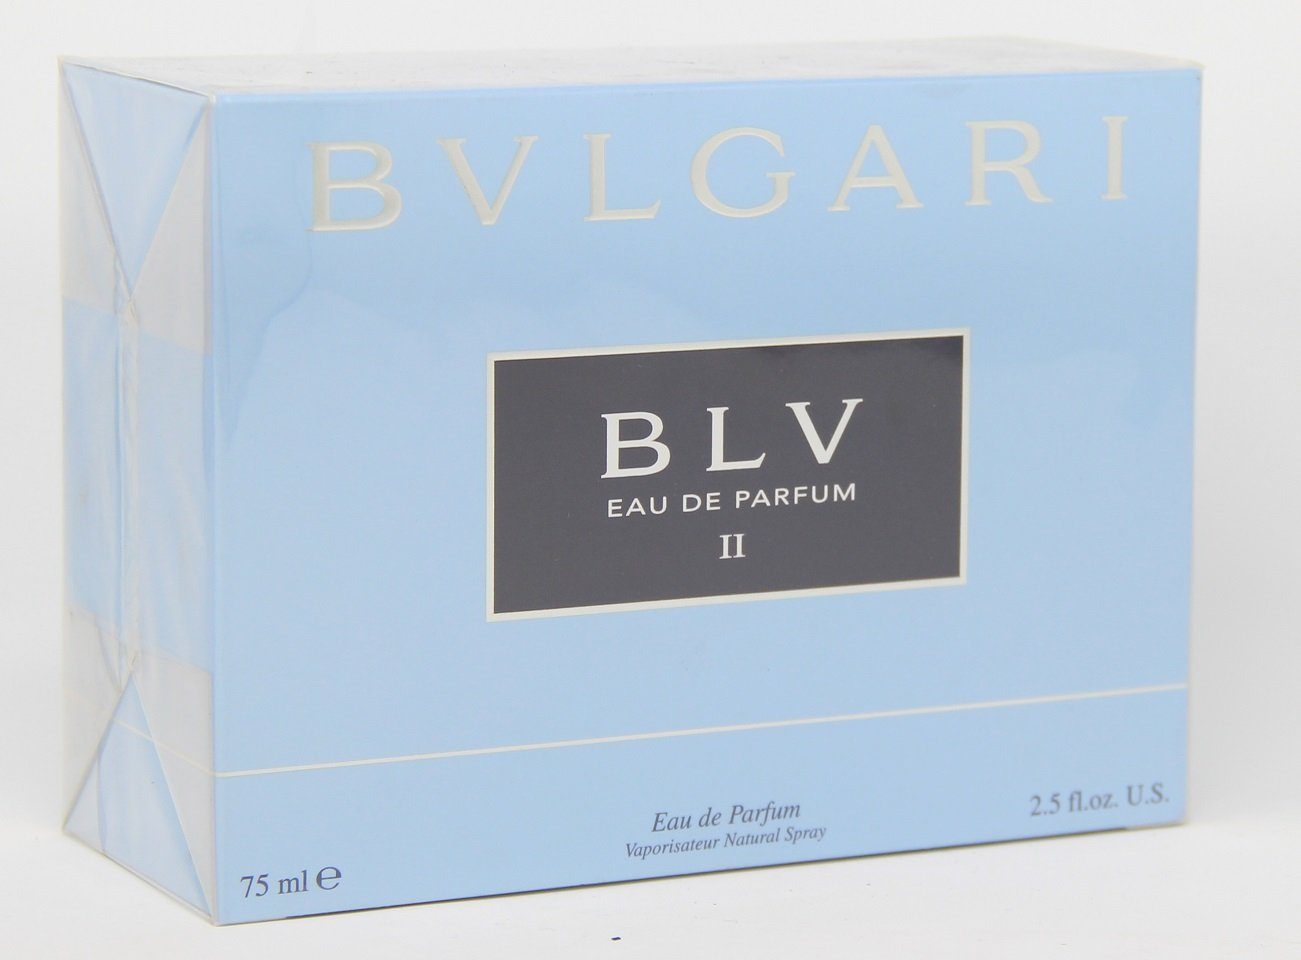 Spray Bvlgari de 75 ml de 2 Parfum BLV Eau Eau Parfum BVLGARI